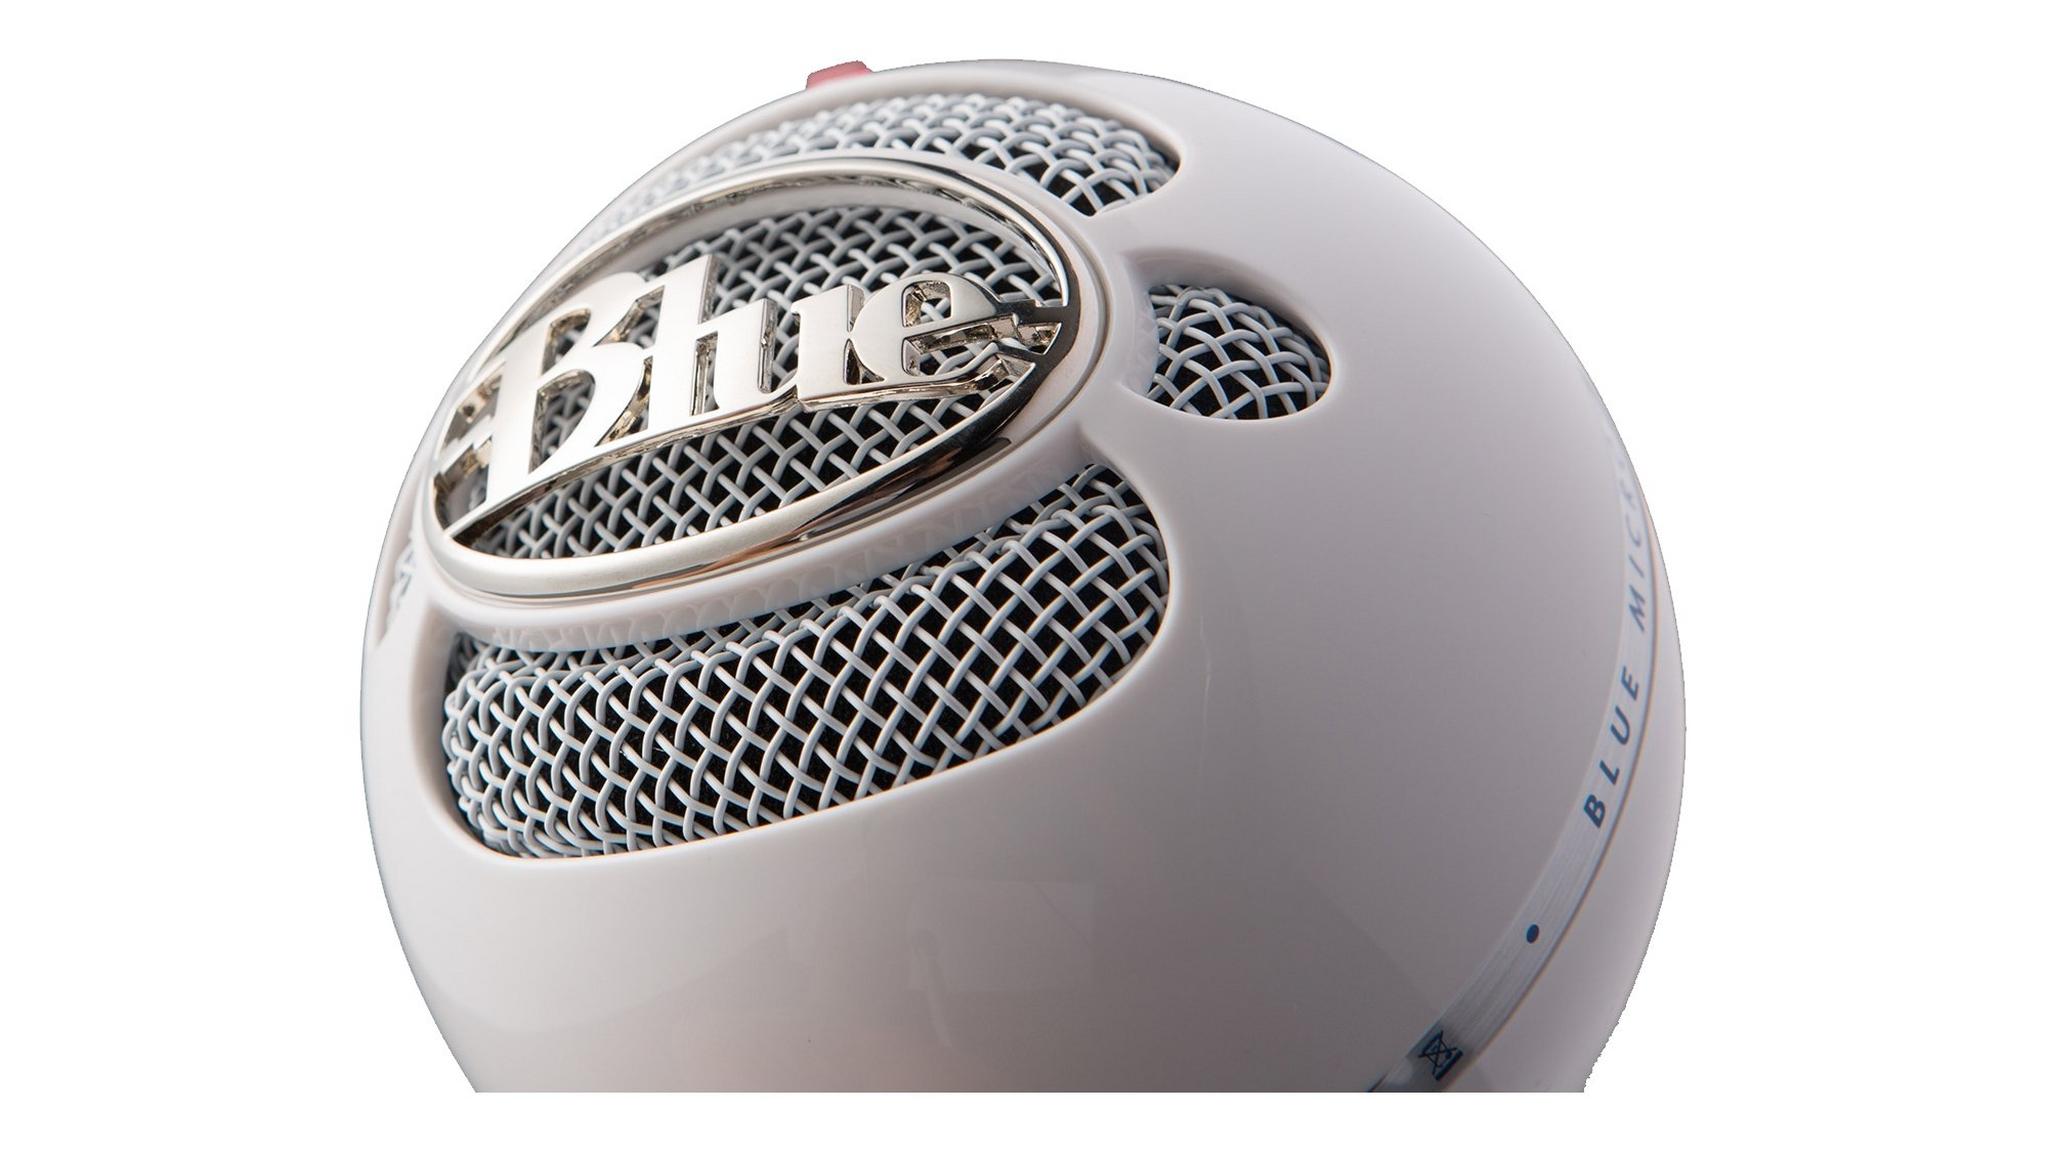 BLUE Yeti Snowball iCE USB Microphone - White